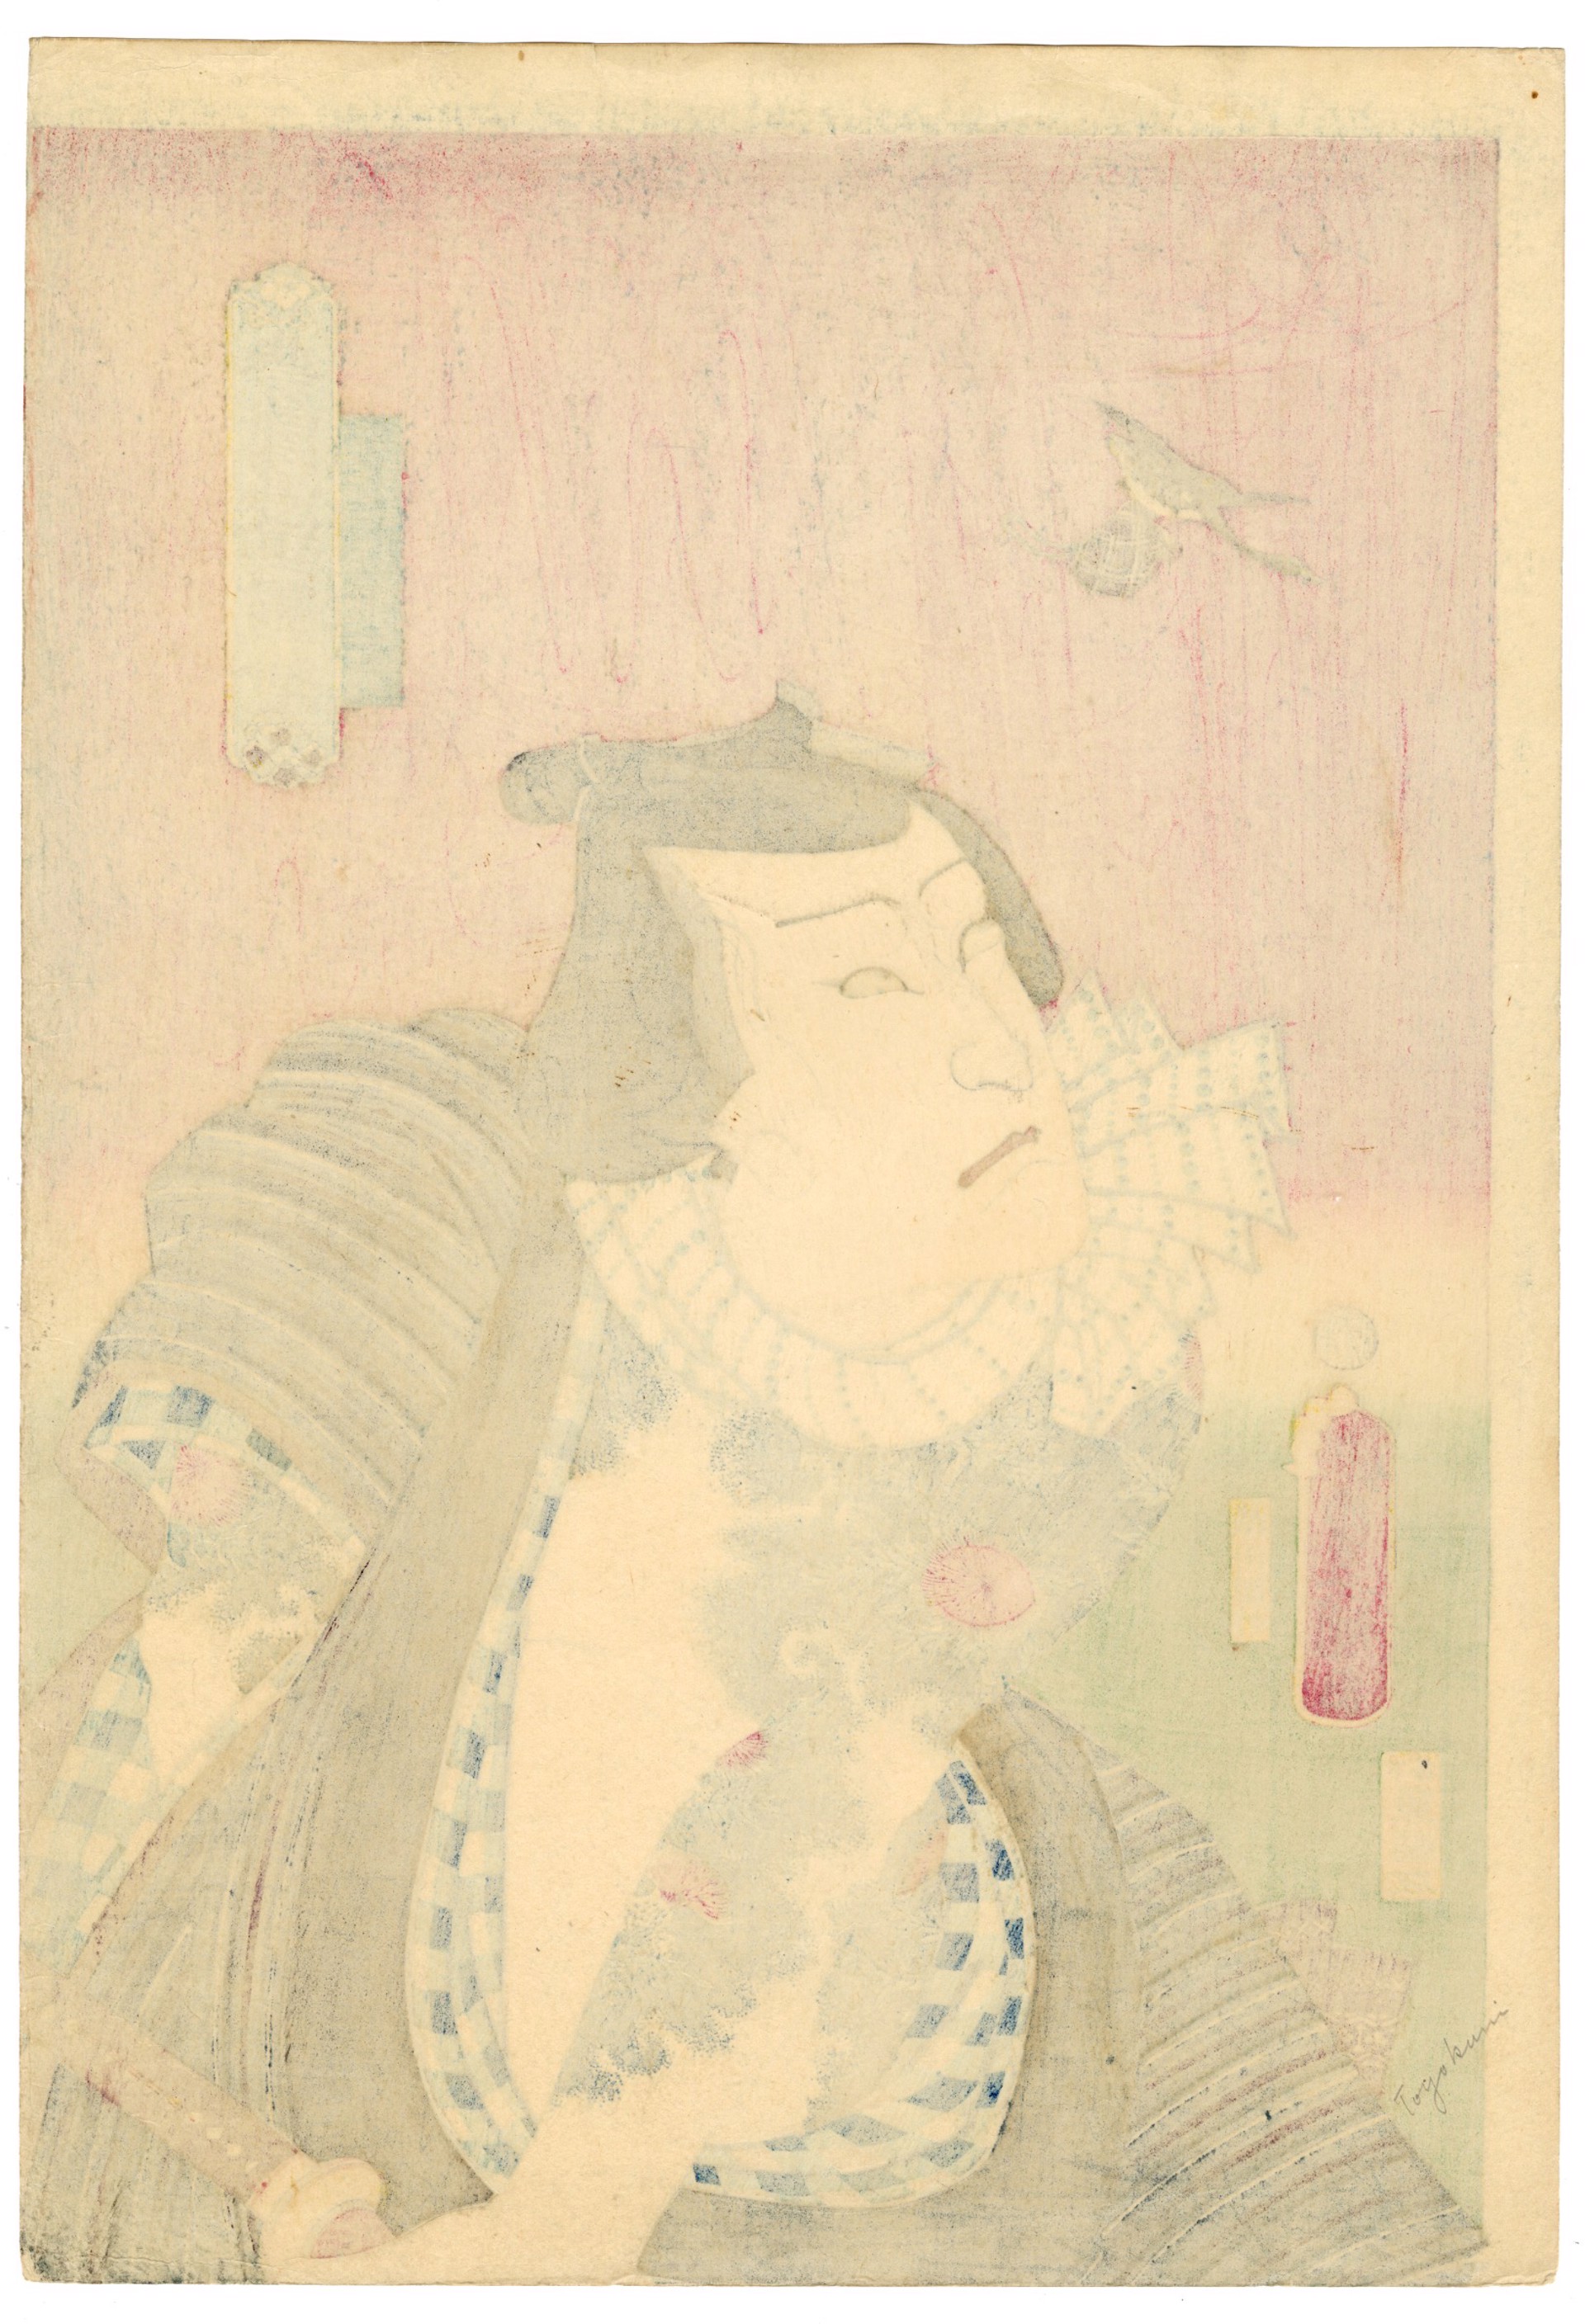 Ichikawa Kodanji IV as Onizami Seikichi by Kunisada